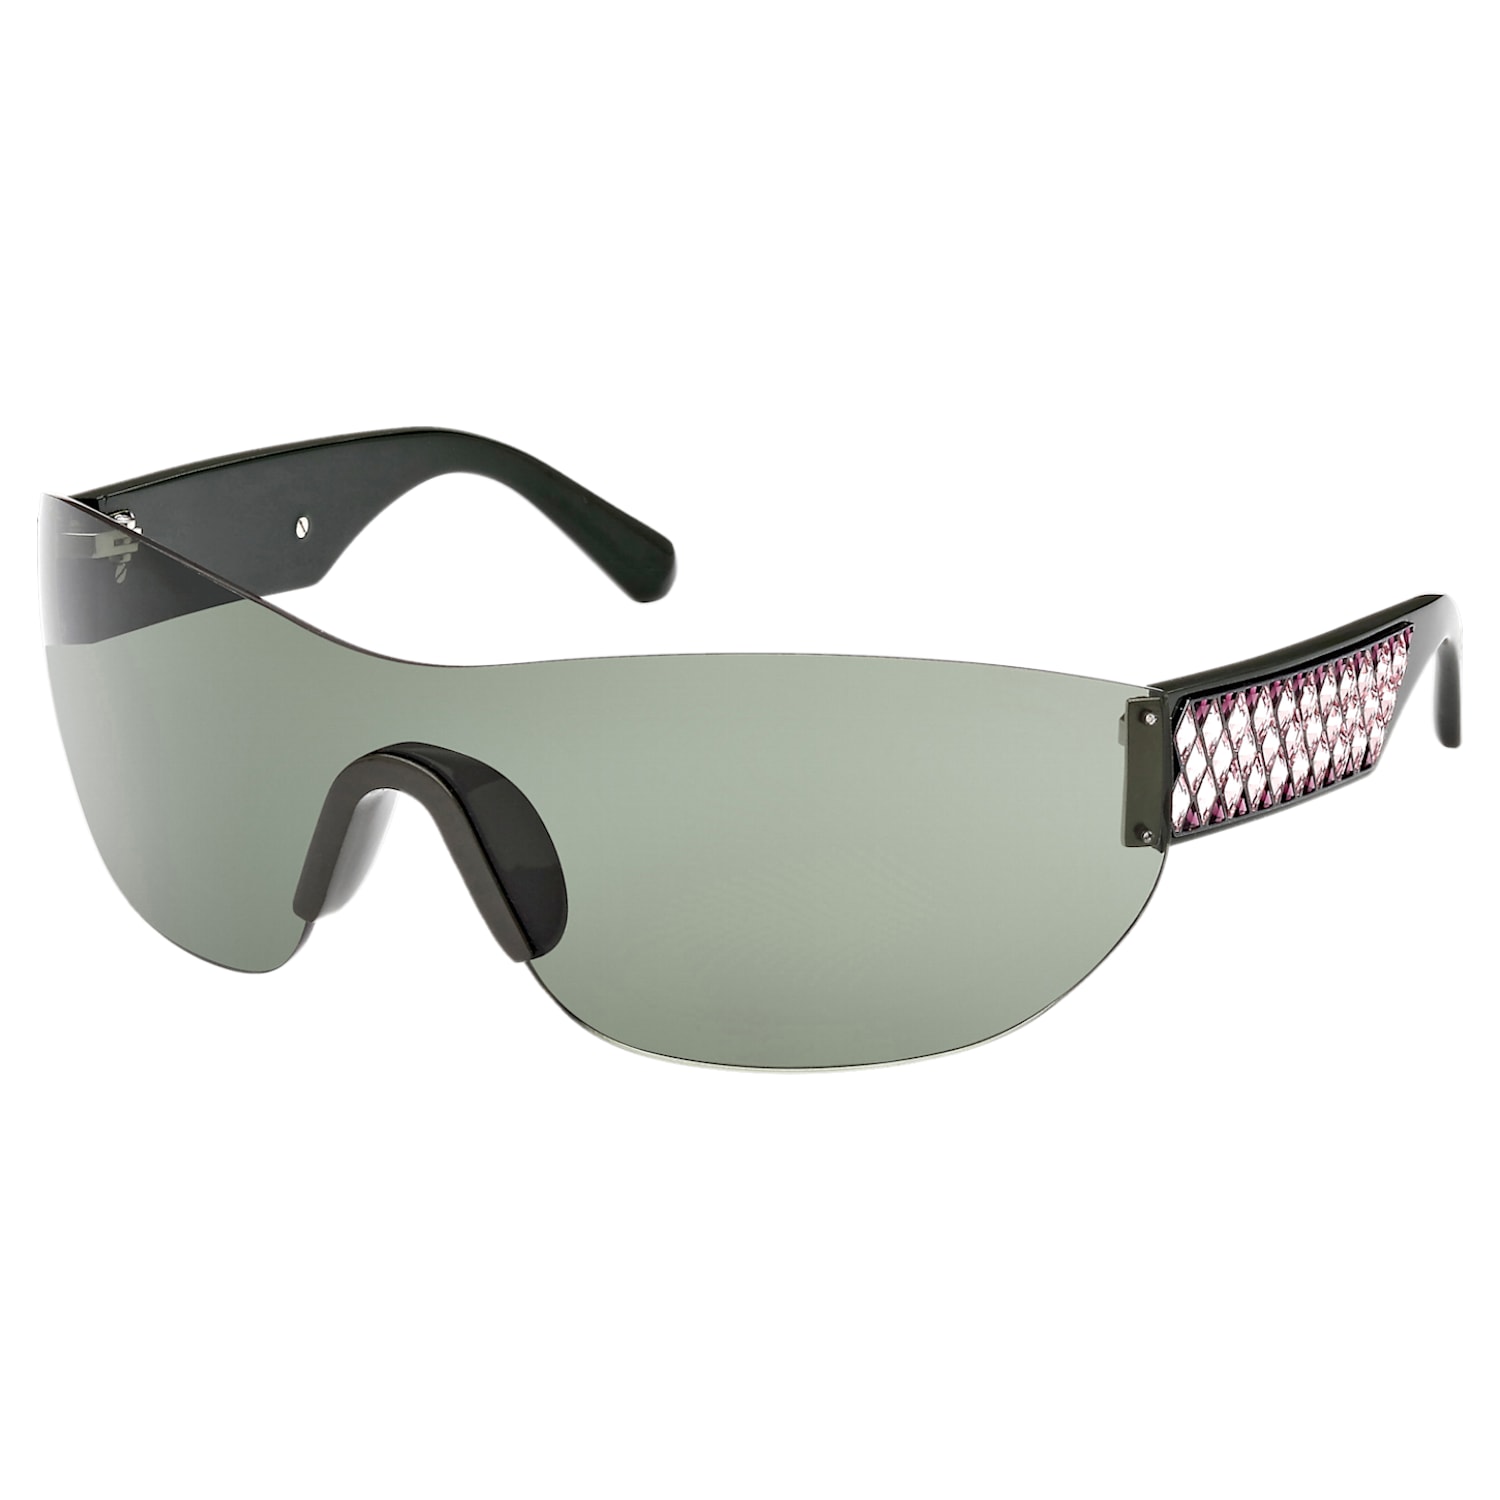 Sunglasses, Mask, Gradient tint, SK0364 98Q, Multicolored | Swarovski